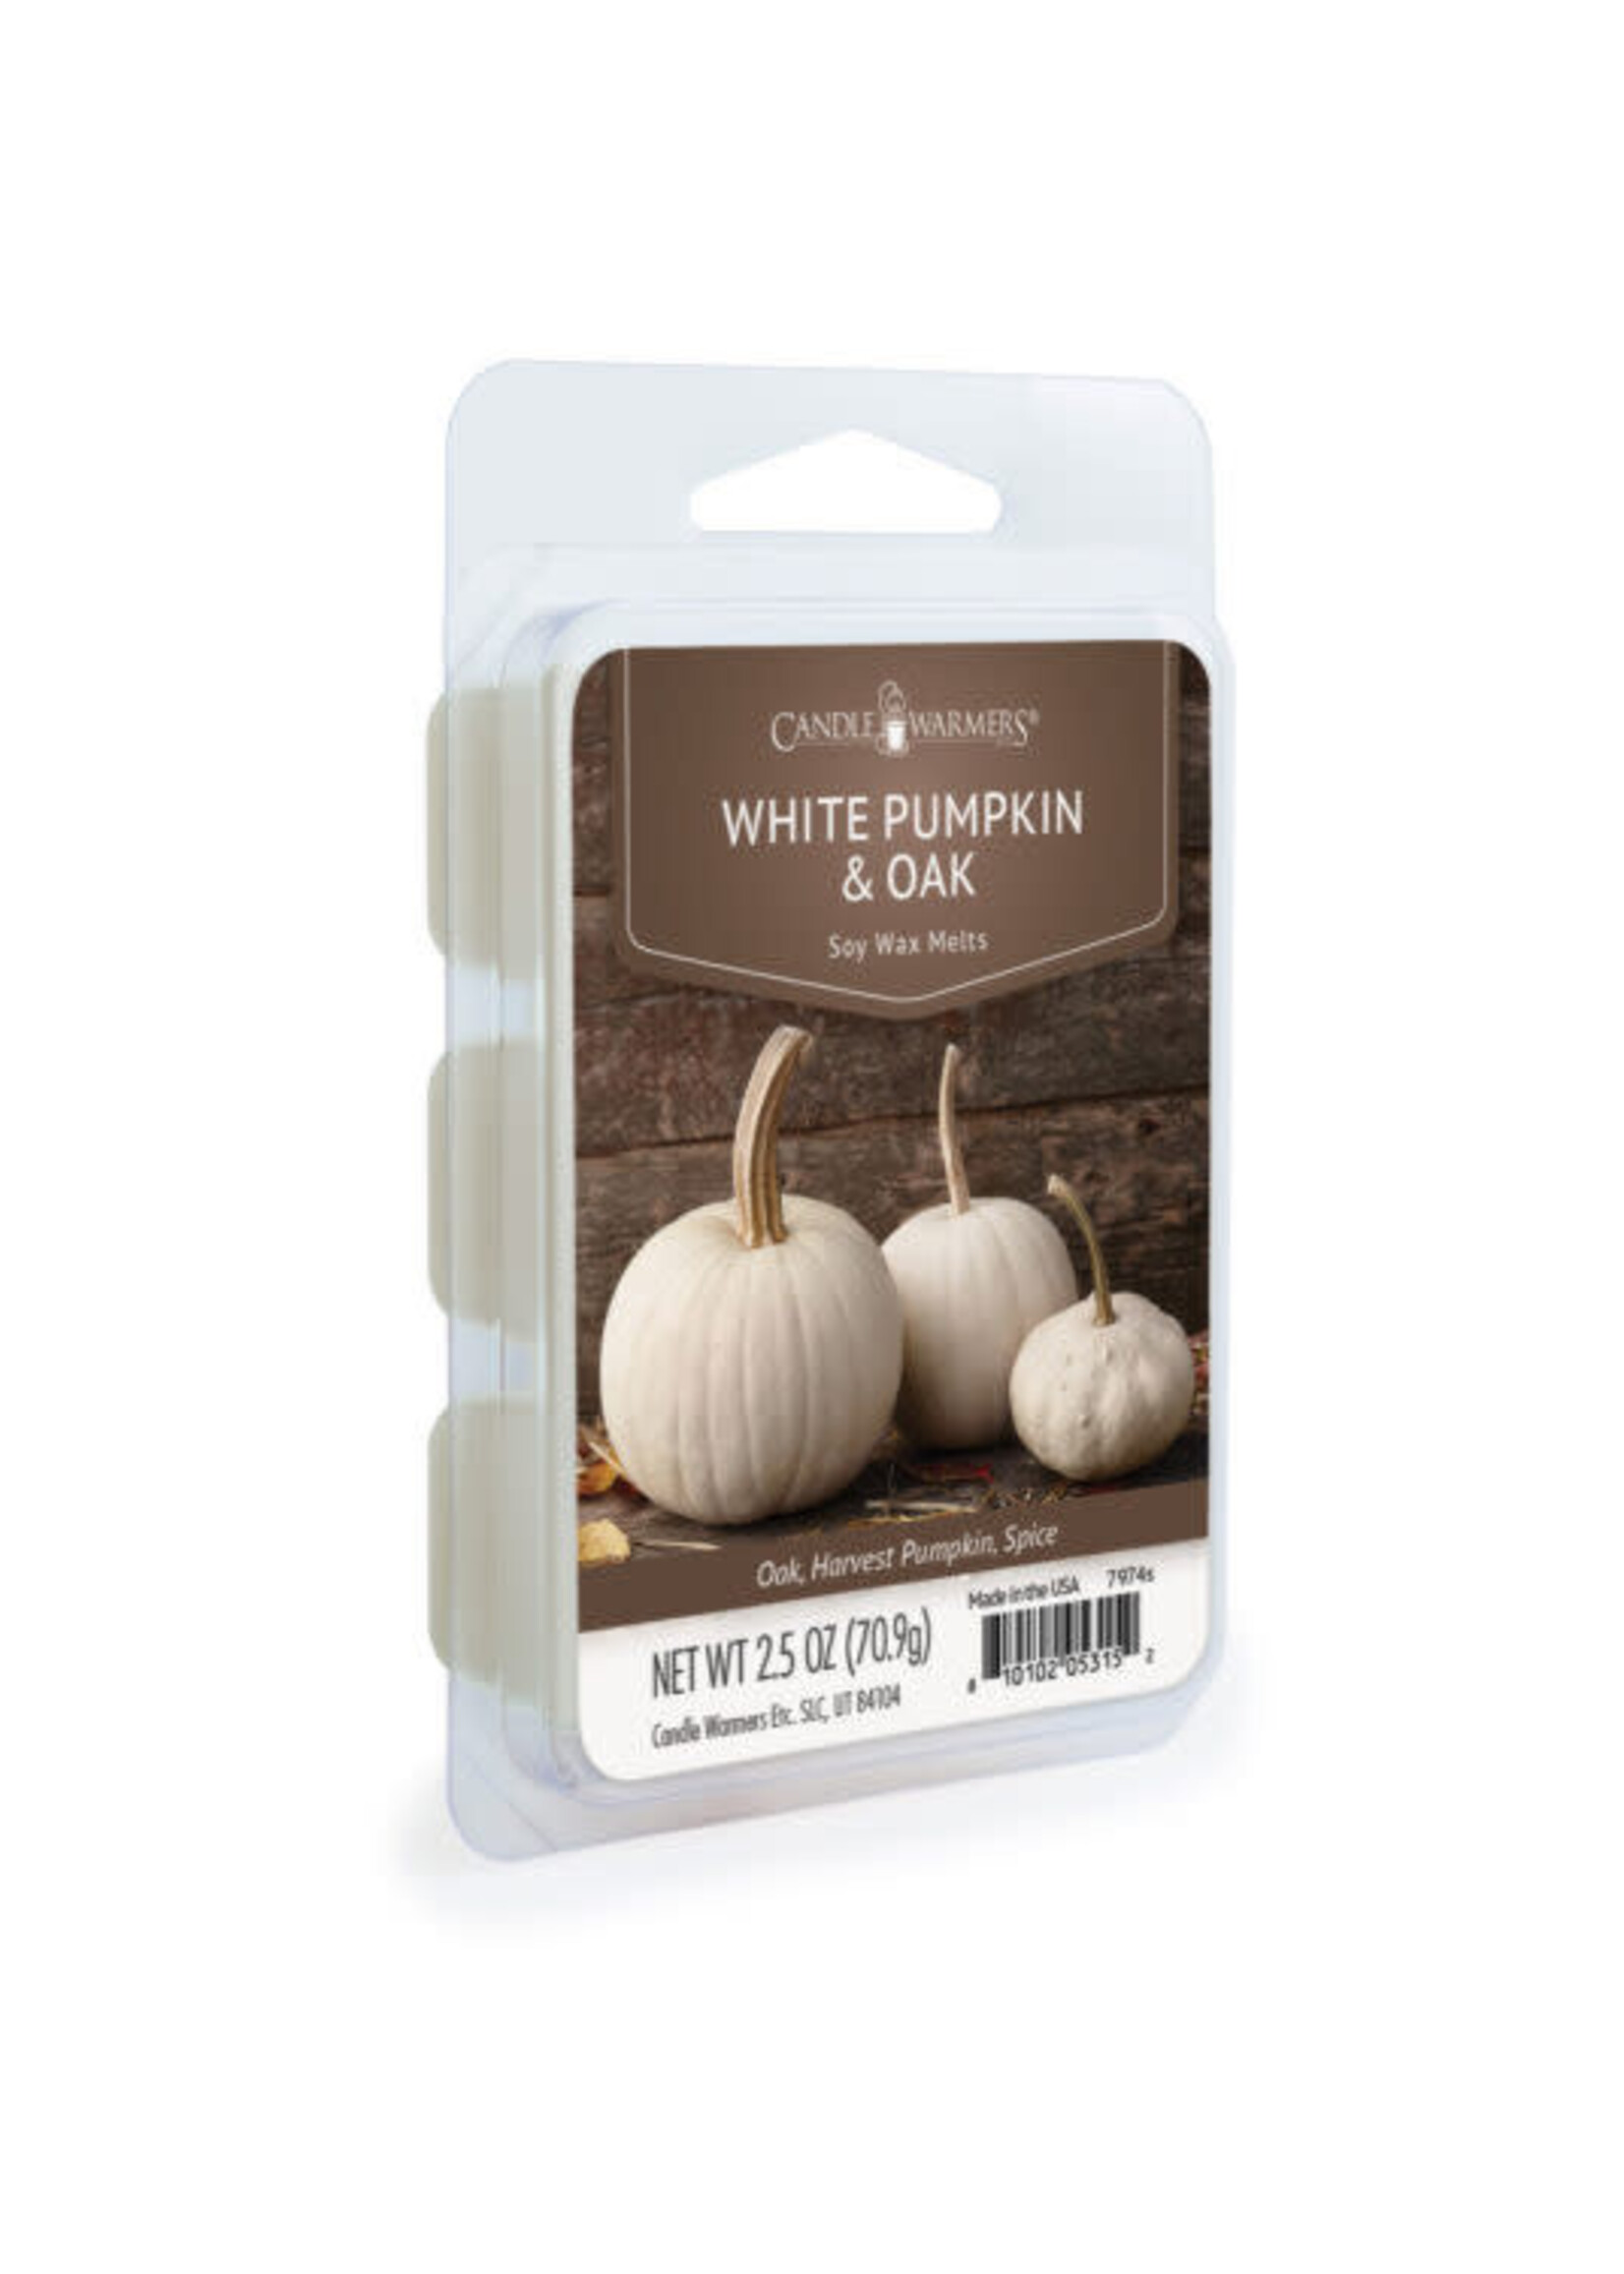 Candle Warmers 2.5 oz Wax Melt White Pumpkin & Oak